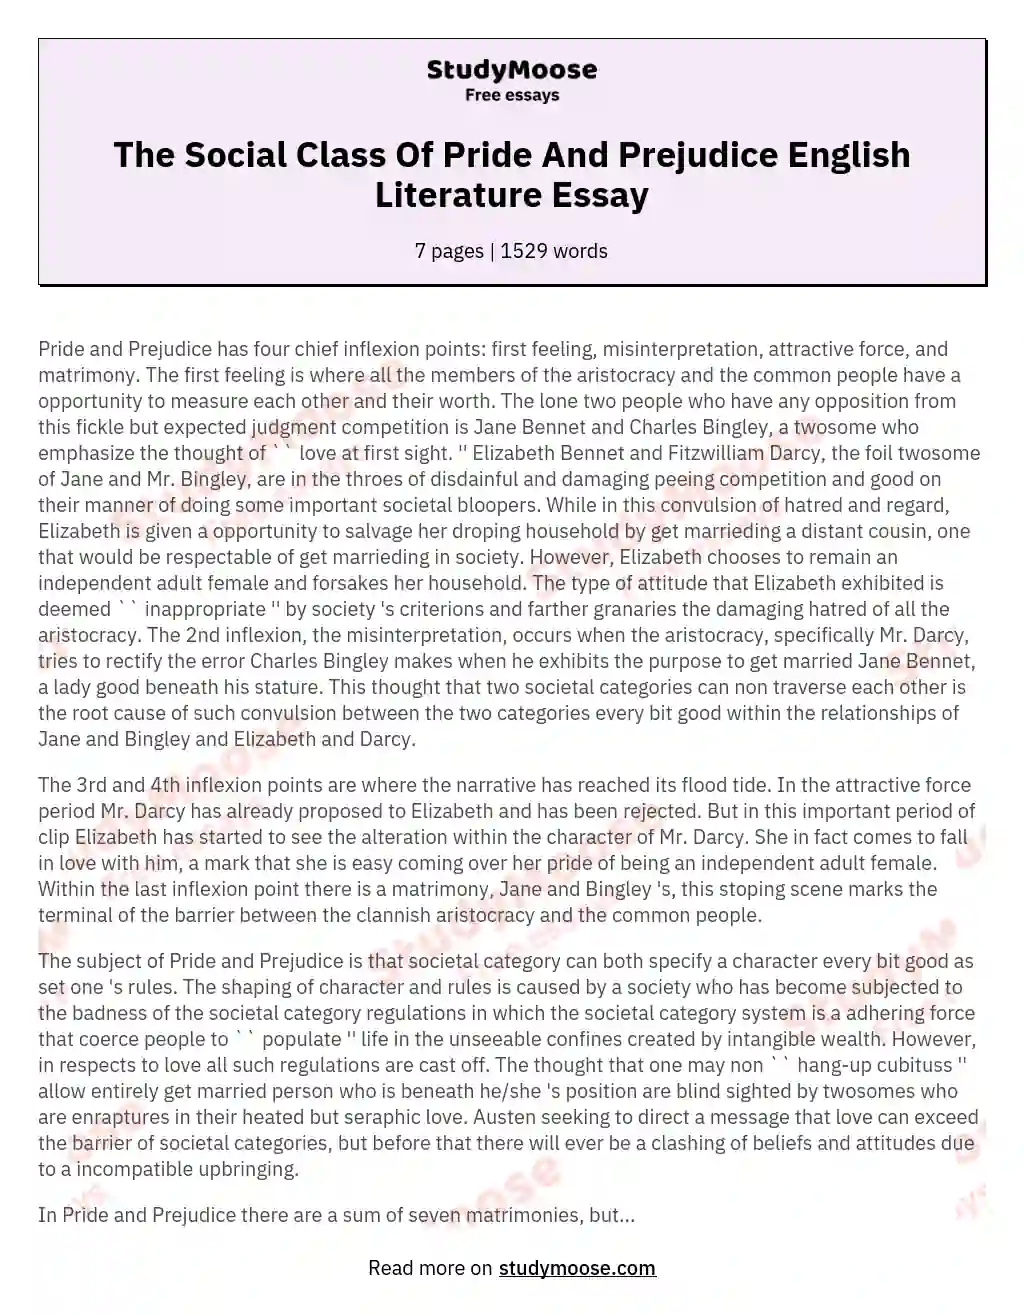 The Social Class Of Pride And Prejudice English Literature Essay essay